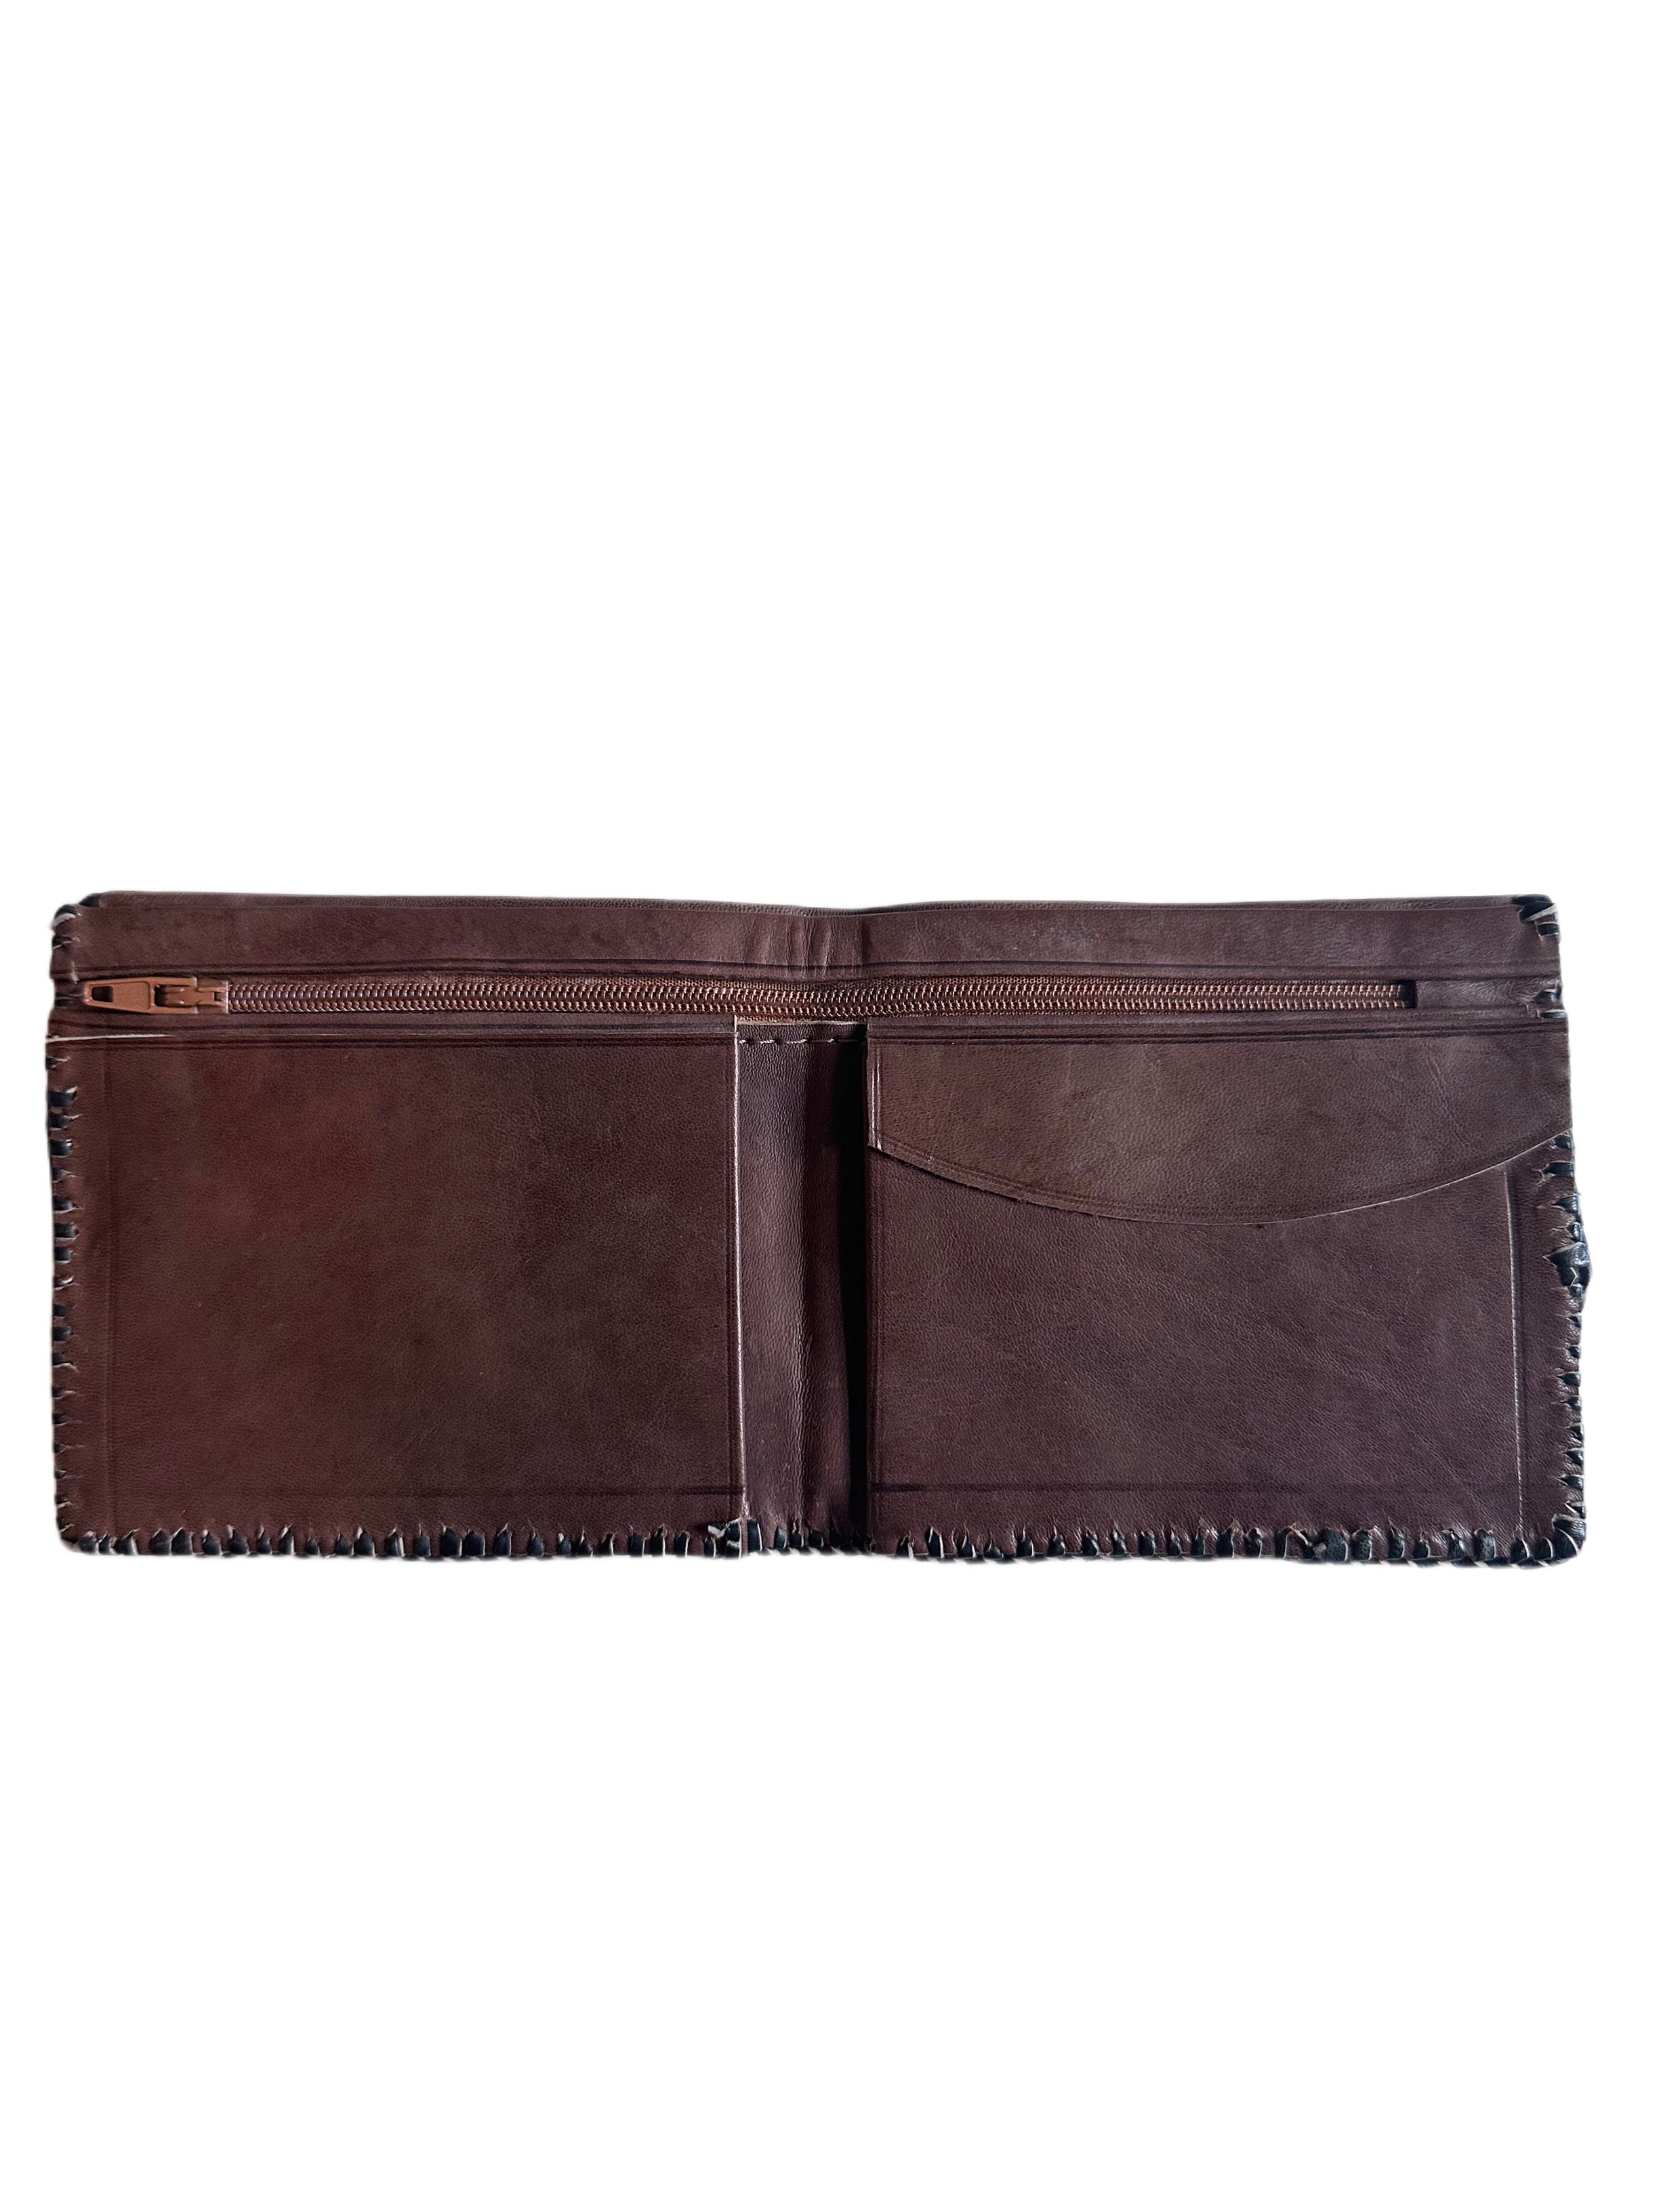 Handmade Leather Unisex Wallet Brown